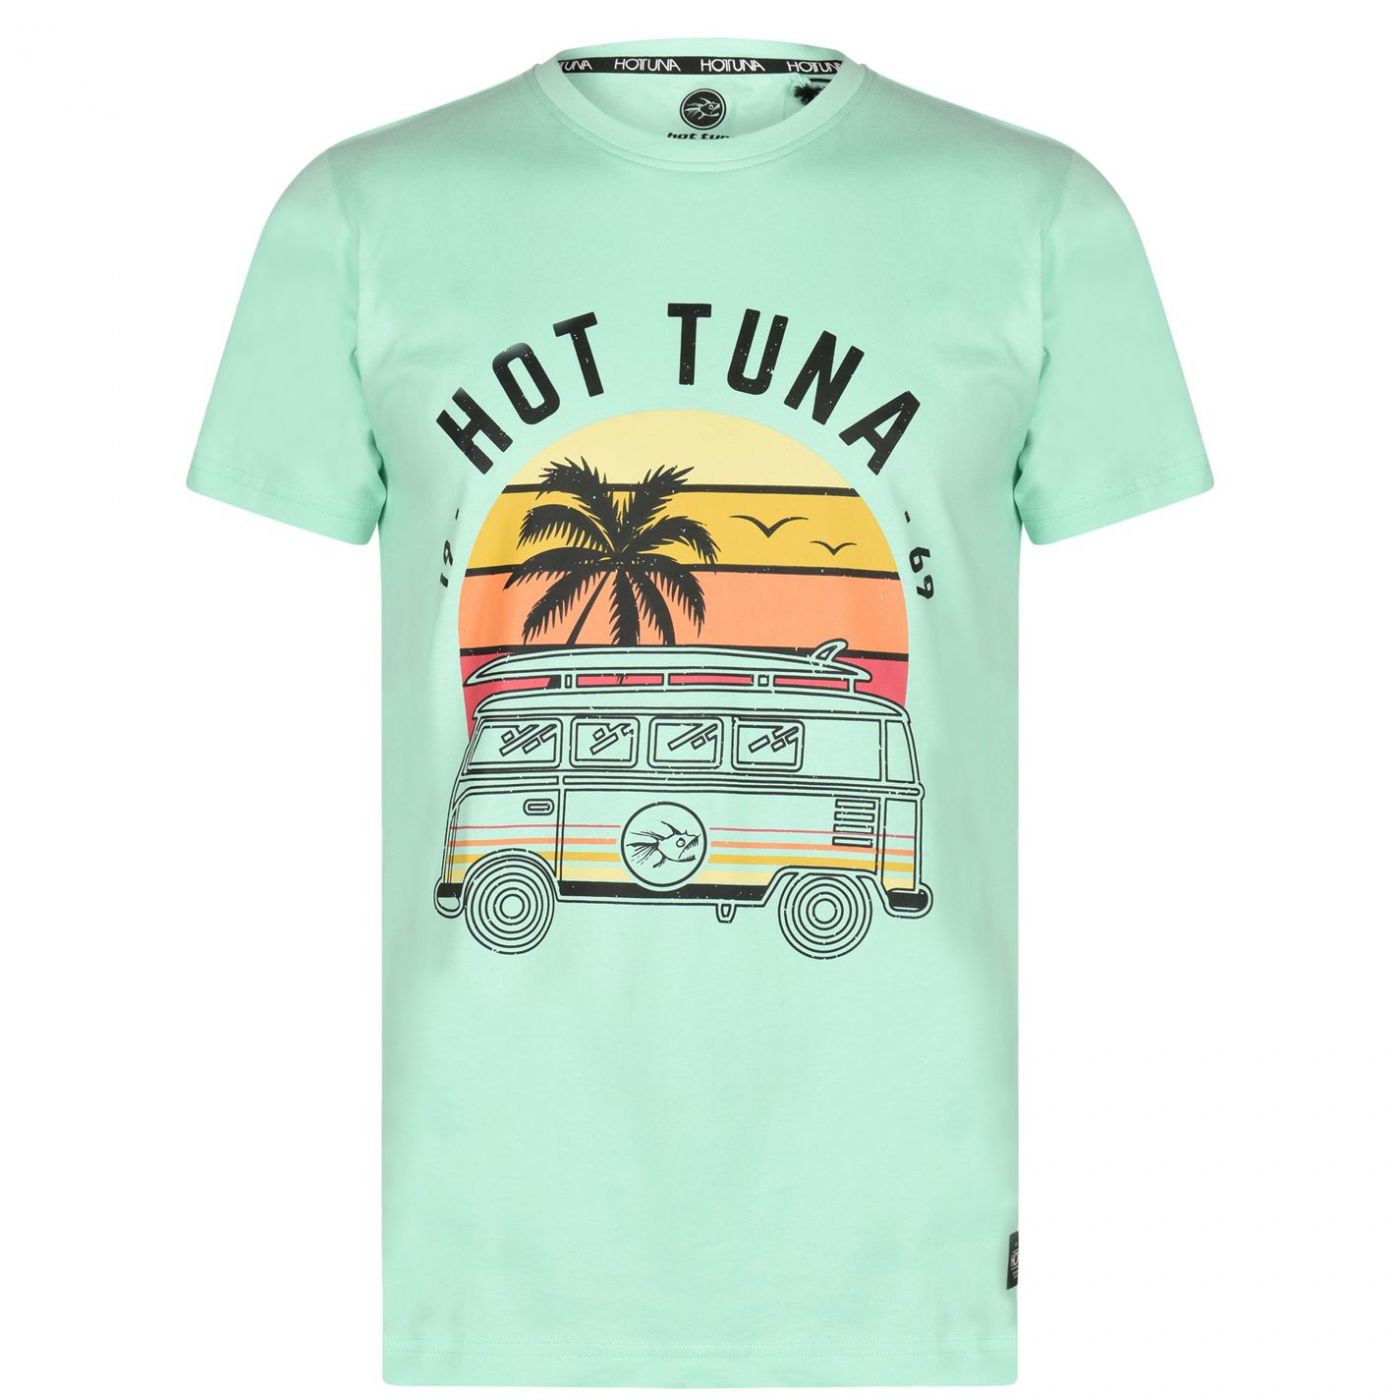 Men's t-shirt Hot Tuna Crew T Shirt.